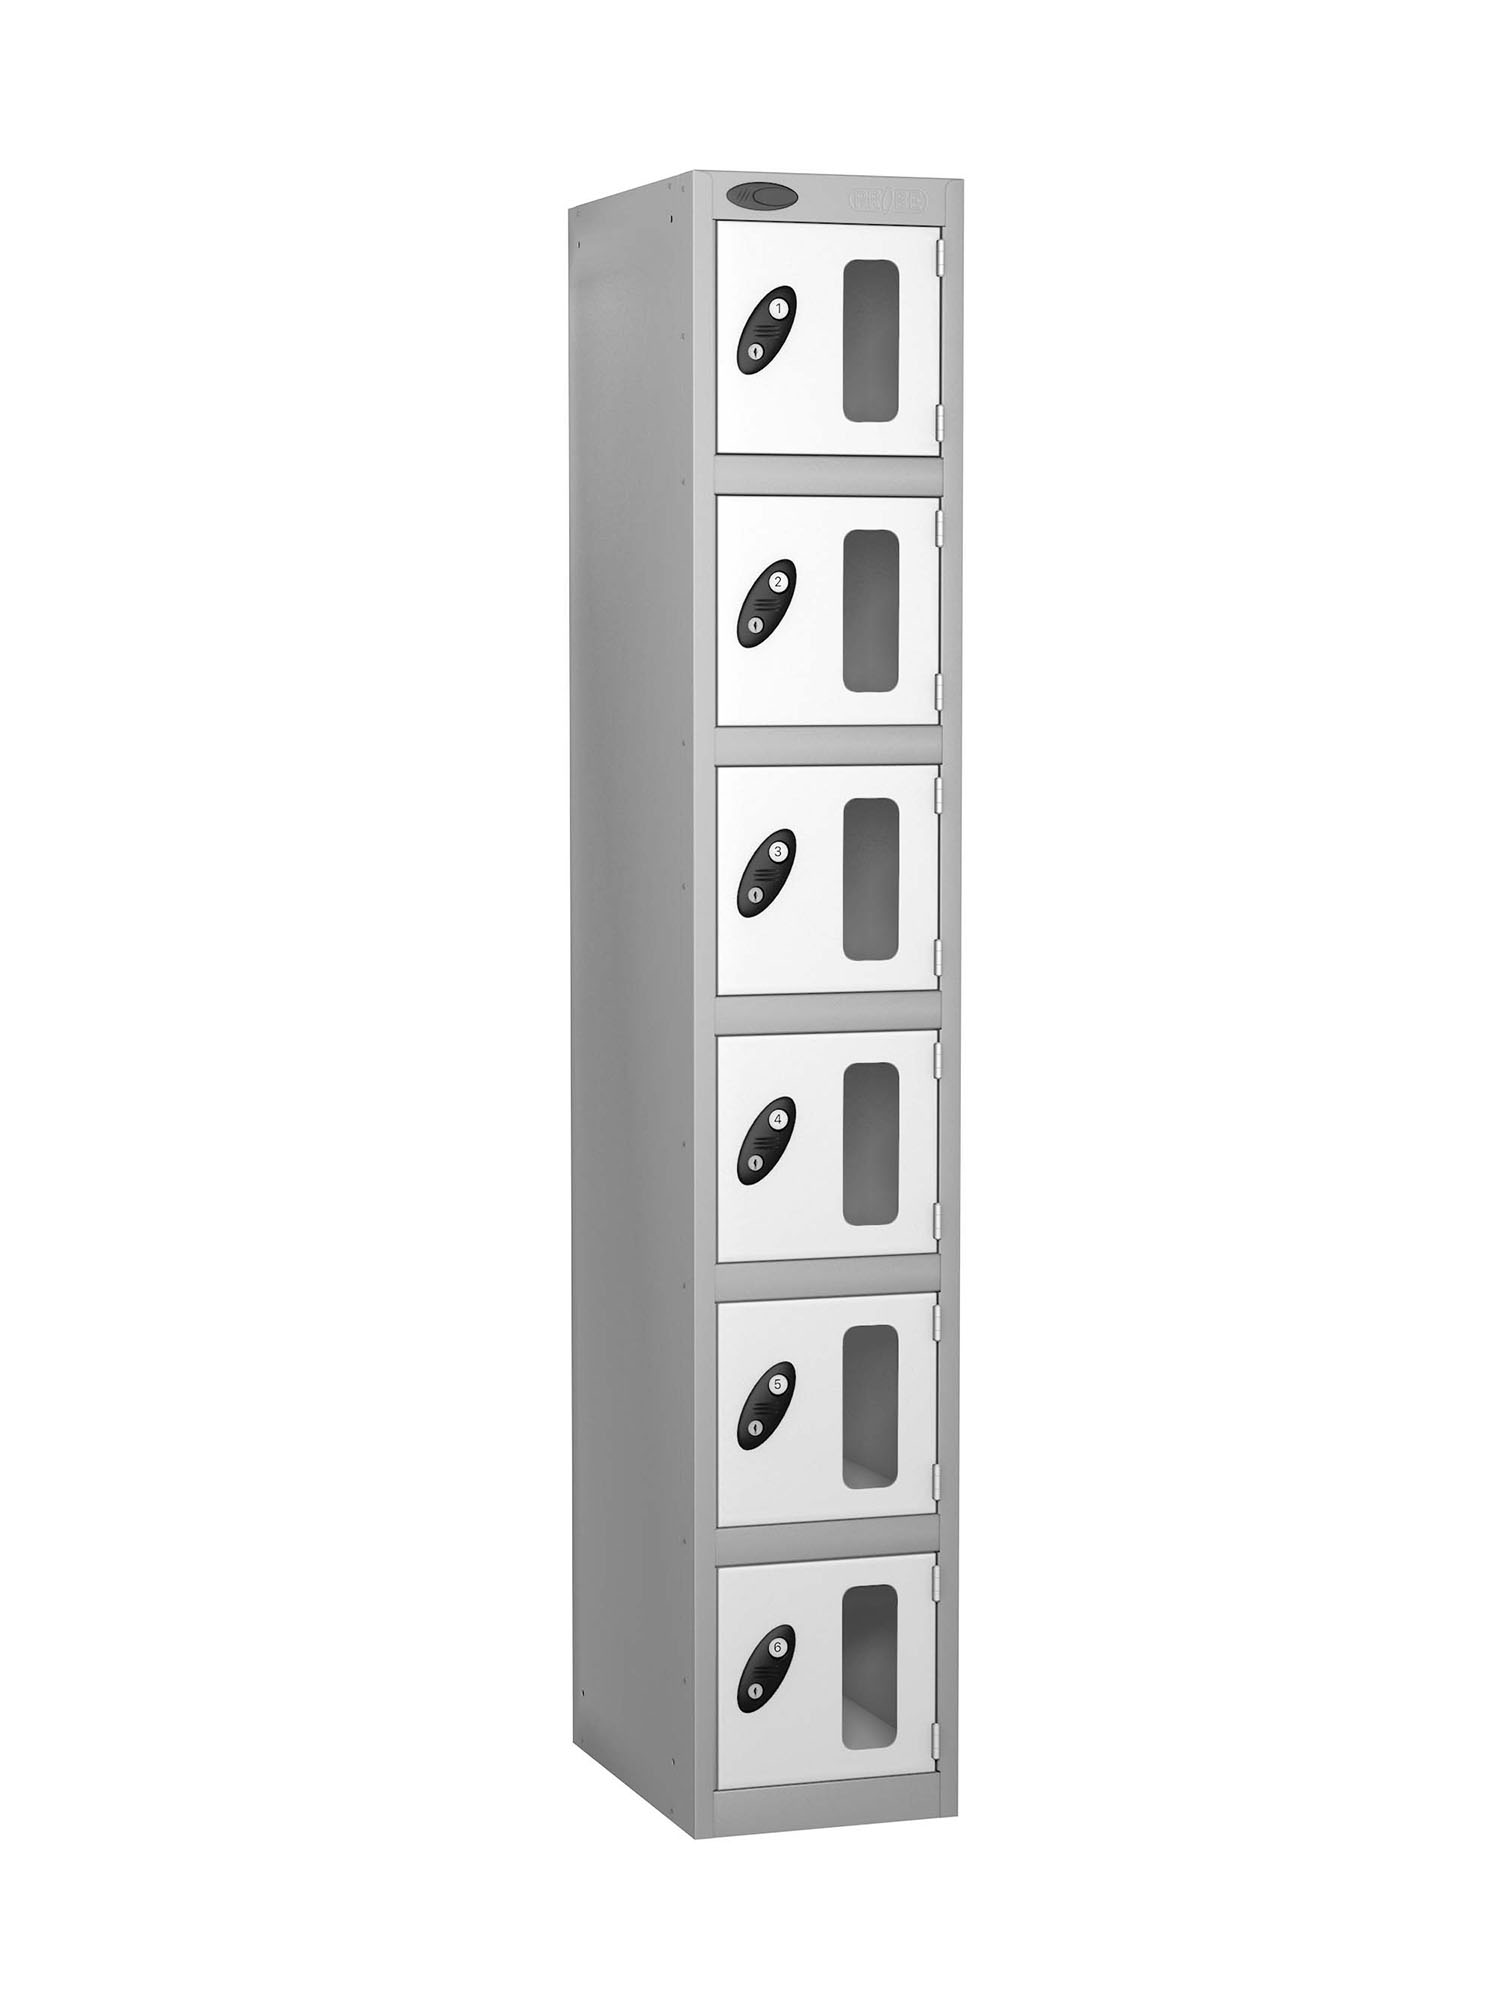 Probe 6 doors vision panel anti-stock theft locker white